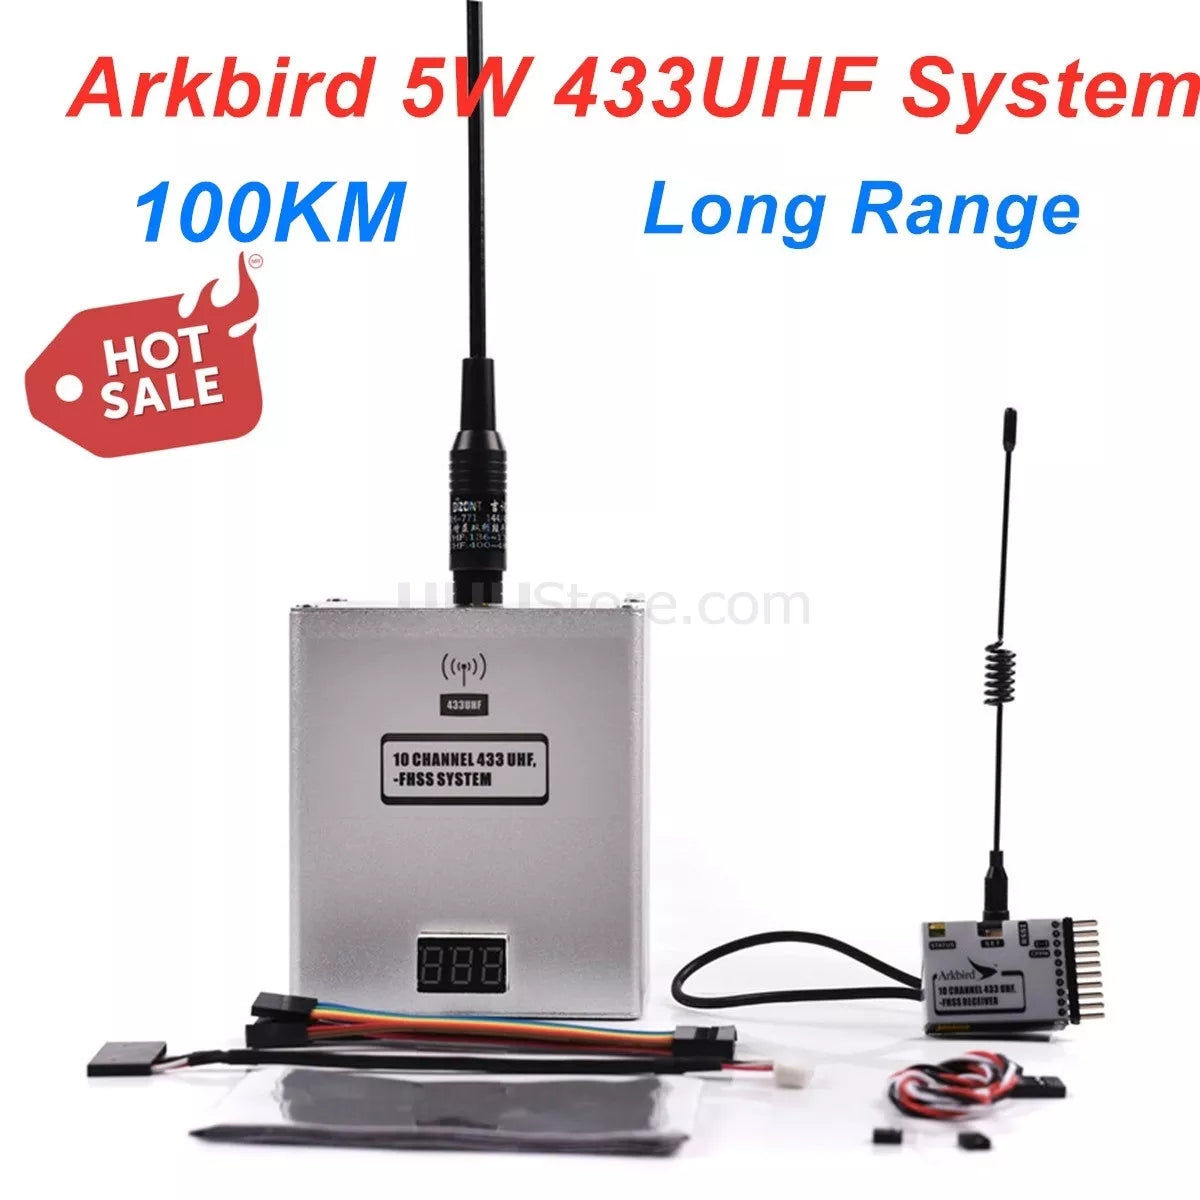 Arkbird 5W 433UHF System 1OOKM Long Range C-oiT